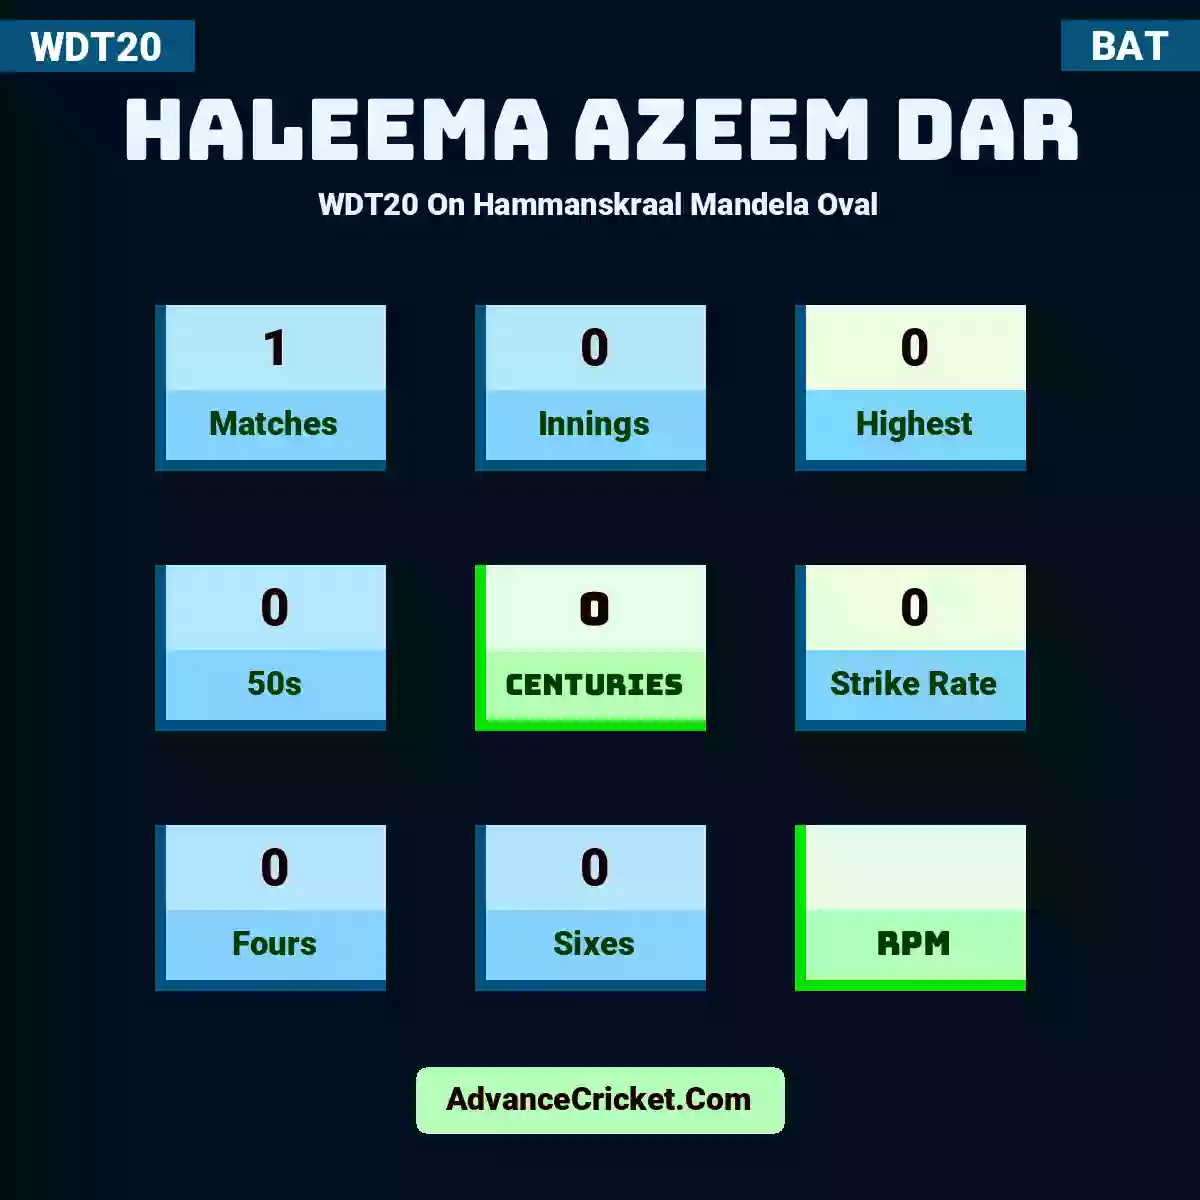 Haleema Azeem Dar WDT20  On Hammanskraal Mandela Oval, Haleema Azeem Dar played 1 matches, scored 0 runs as highest, 0 half-centuries, and 0 centuries, with a strike rate of 0. H.Azeem.Dar hit 0 fours and 0 sixes.